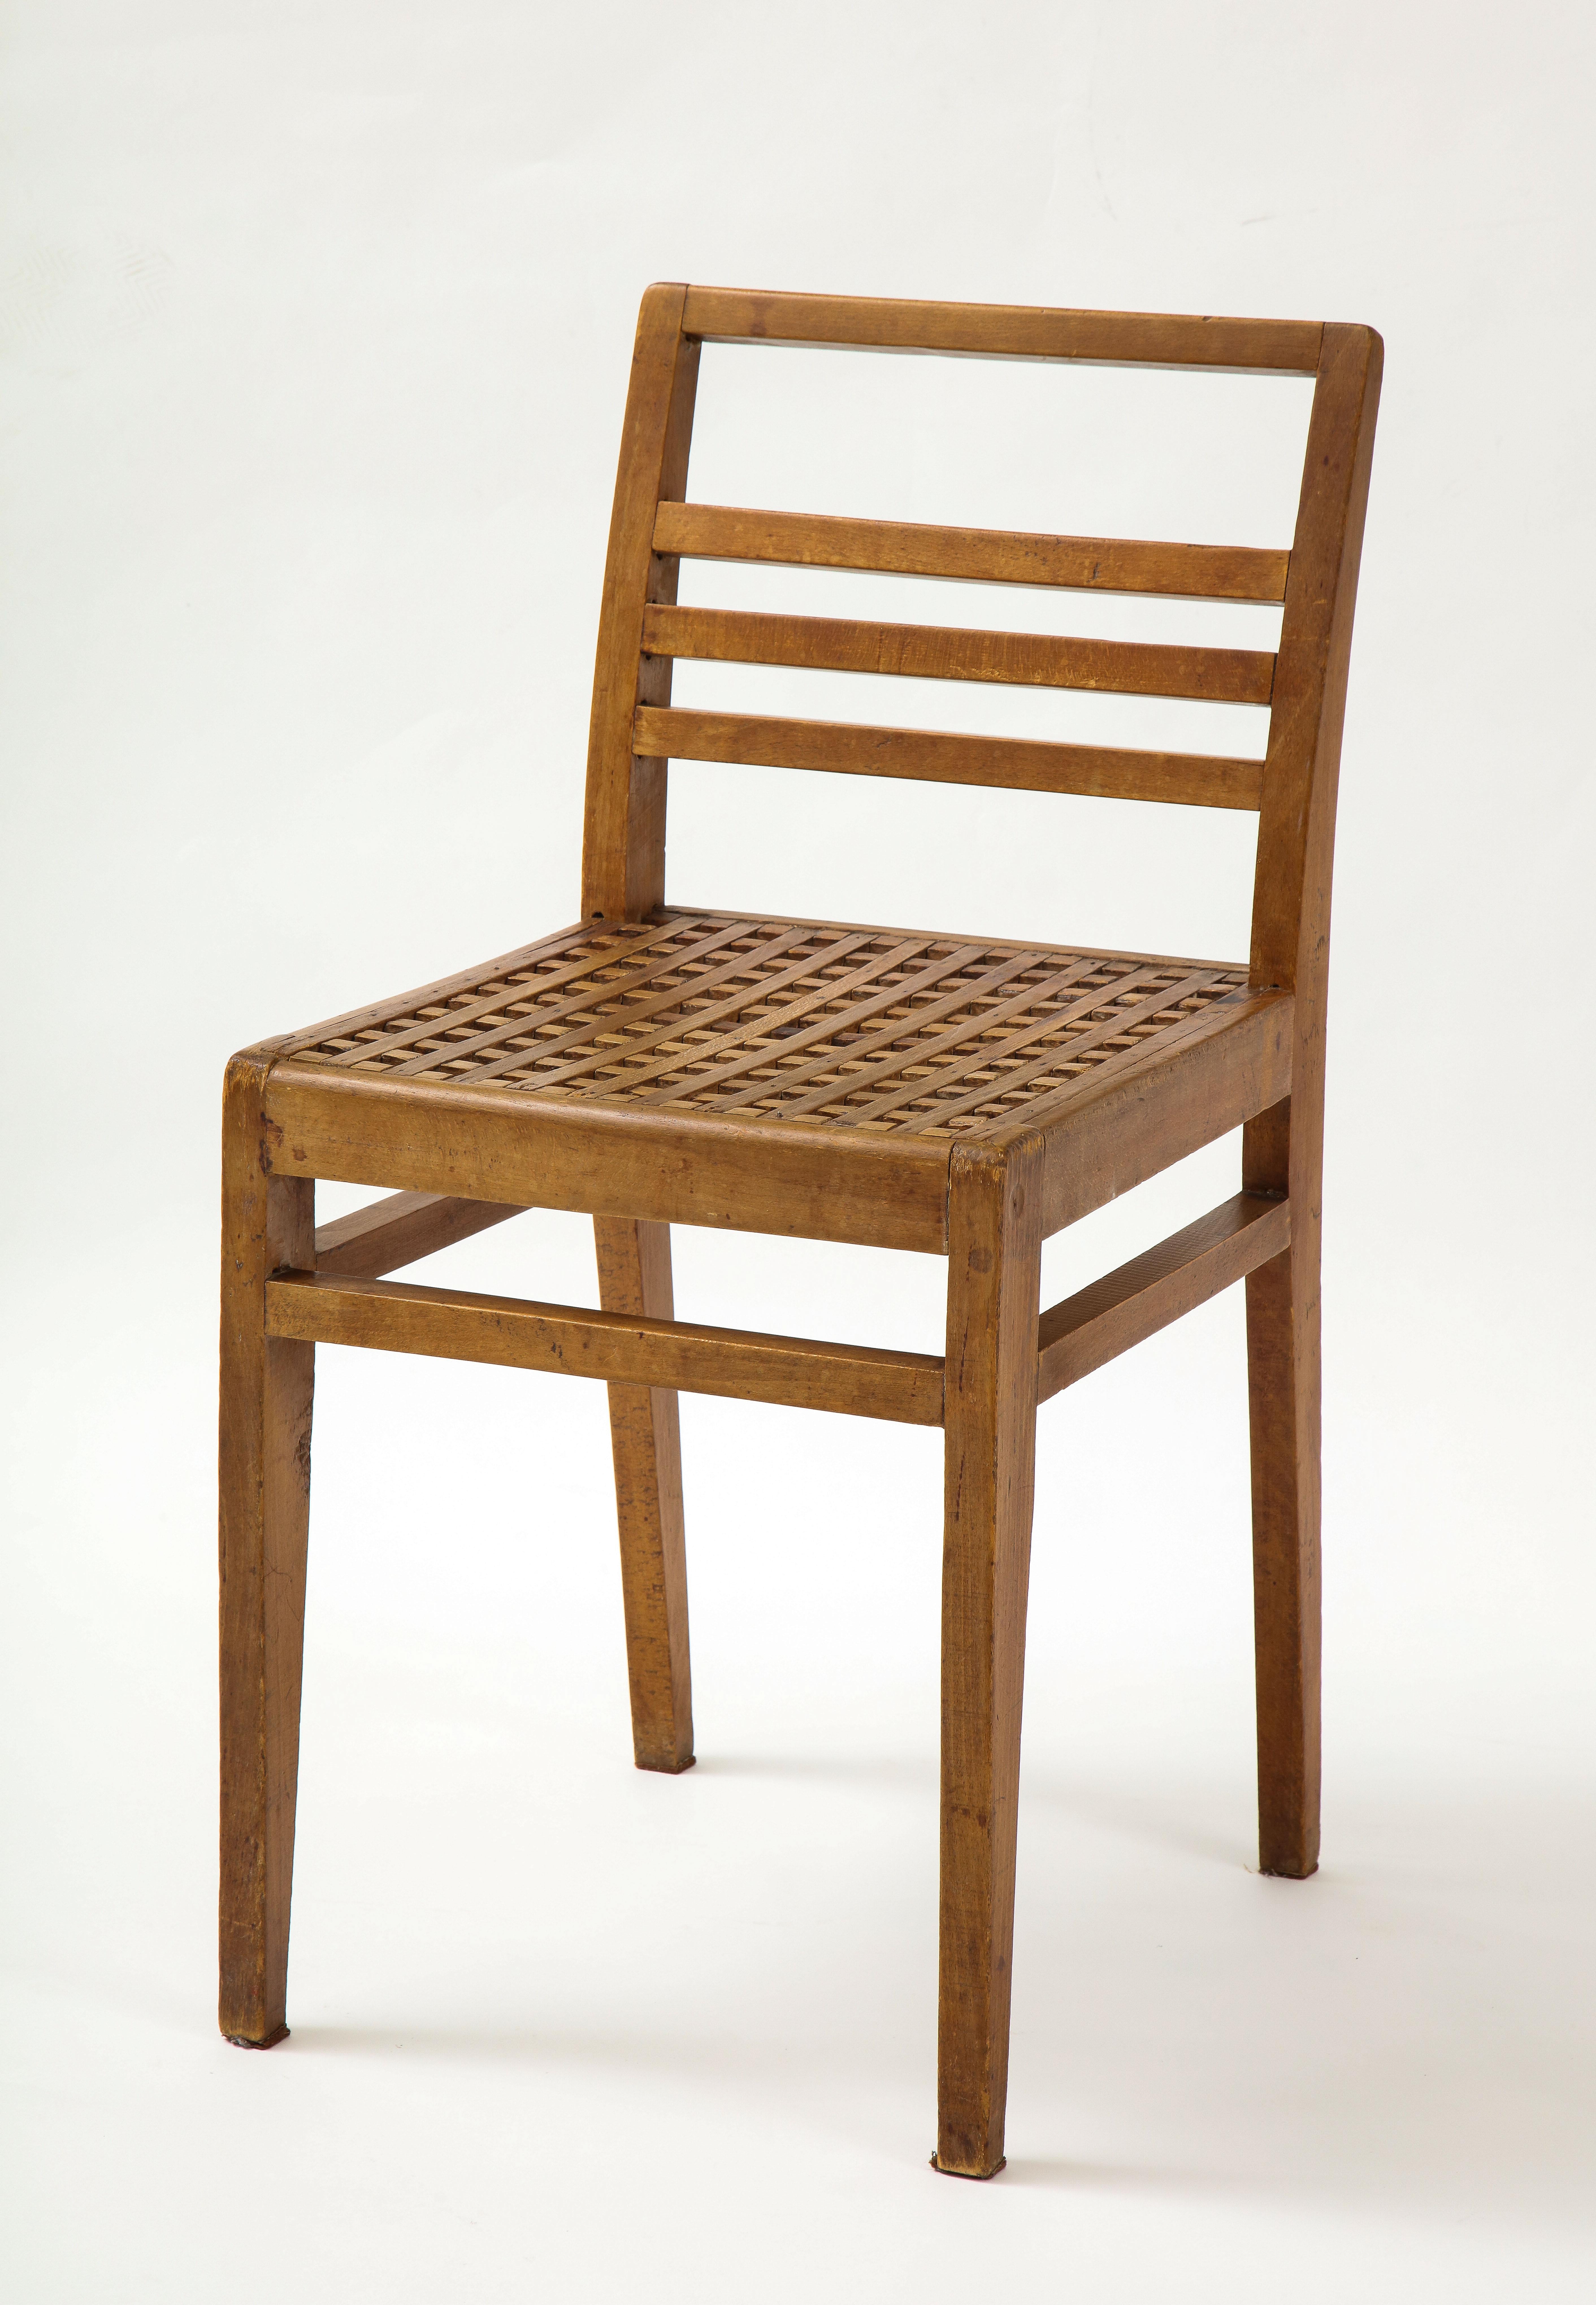 René Gabriel (1890-1950)
Early chair, France, circa 1940, First prod. ‘Service des Constructions Provisoires’
Beech

Measures: H 29.75, W 14.75, D 15.25 in.